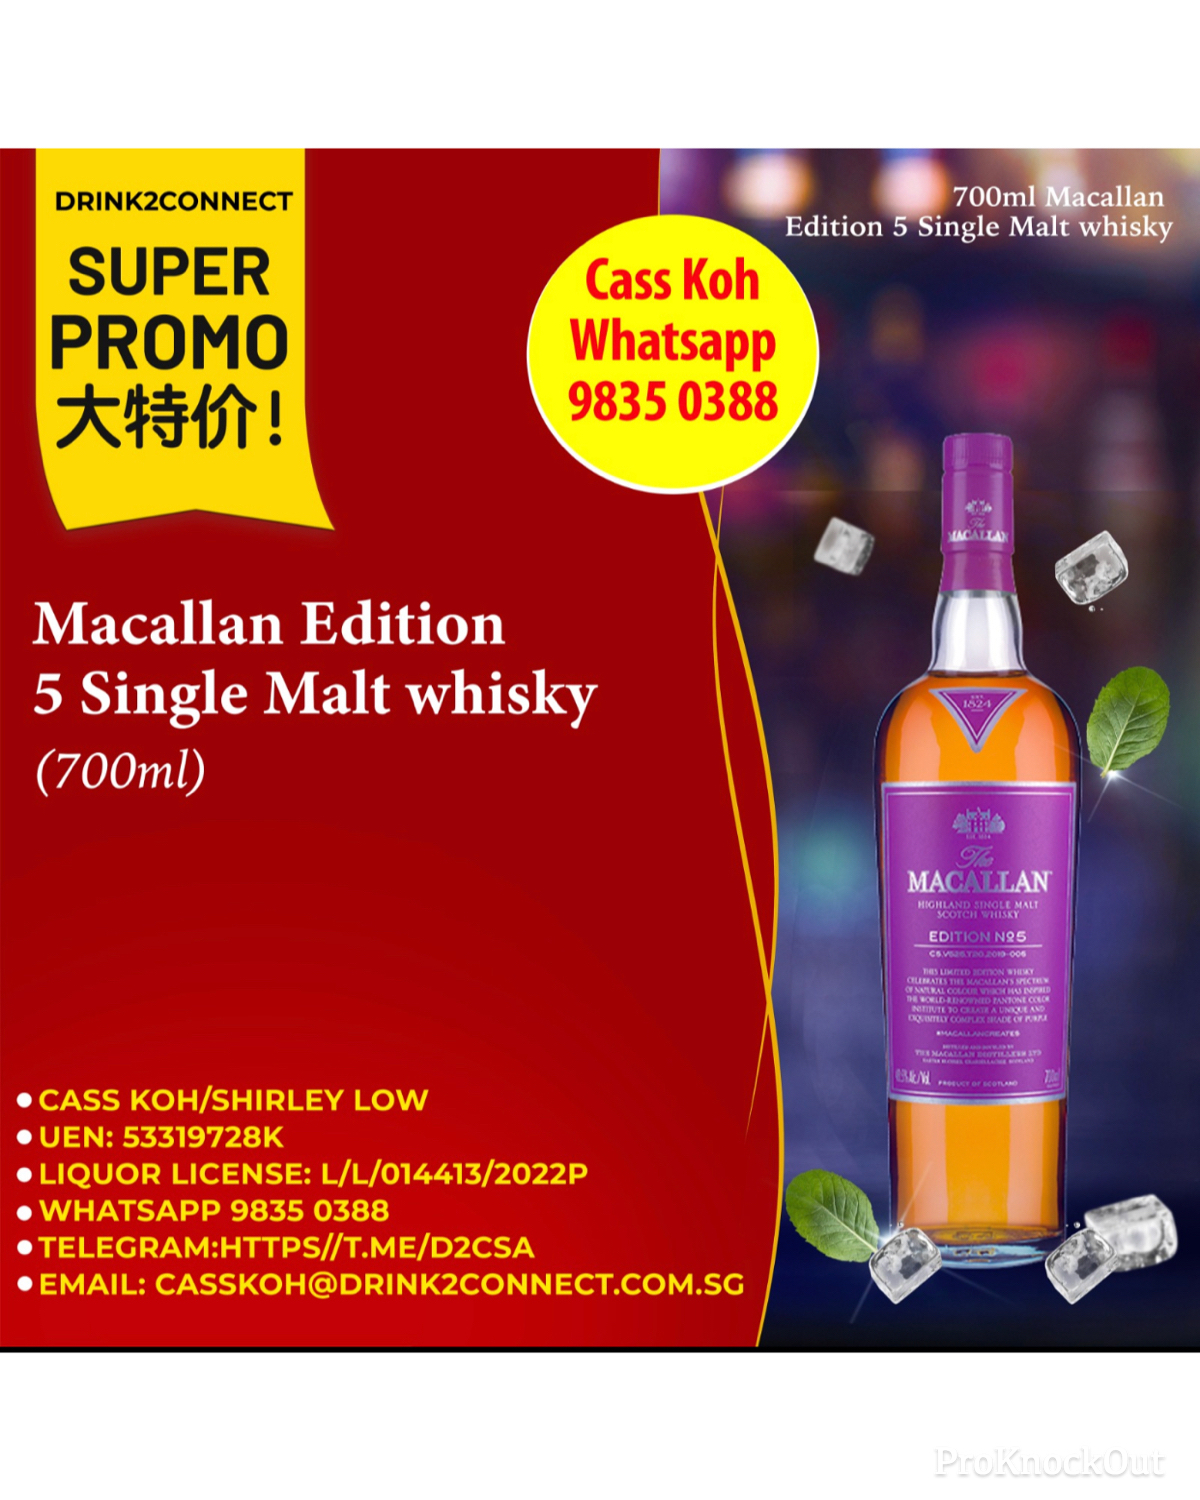 700ml Macallan Edition 5 Whisky/Macallan Whisky Sale